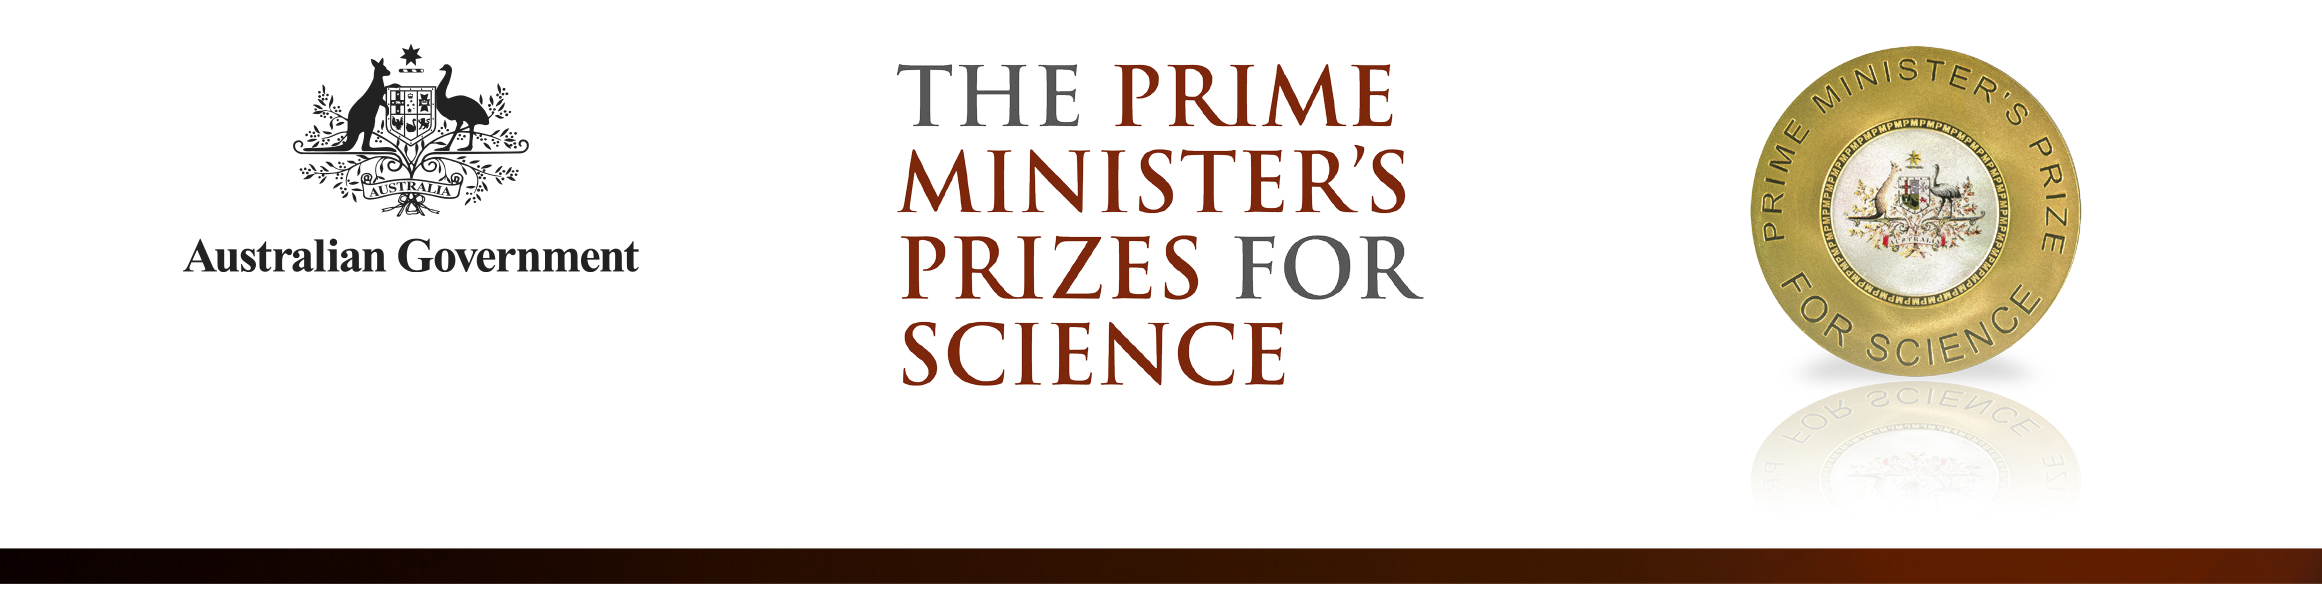 Prime Minister's Prizes for Science